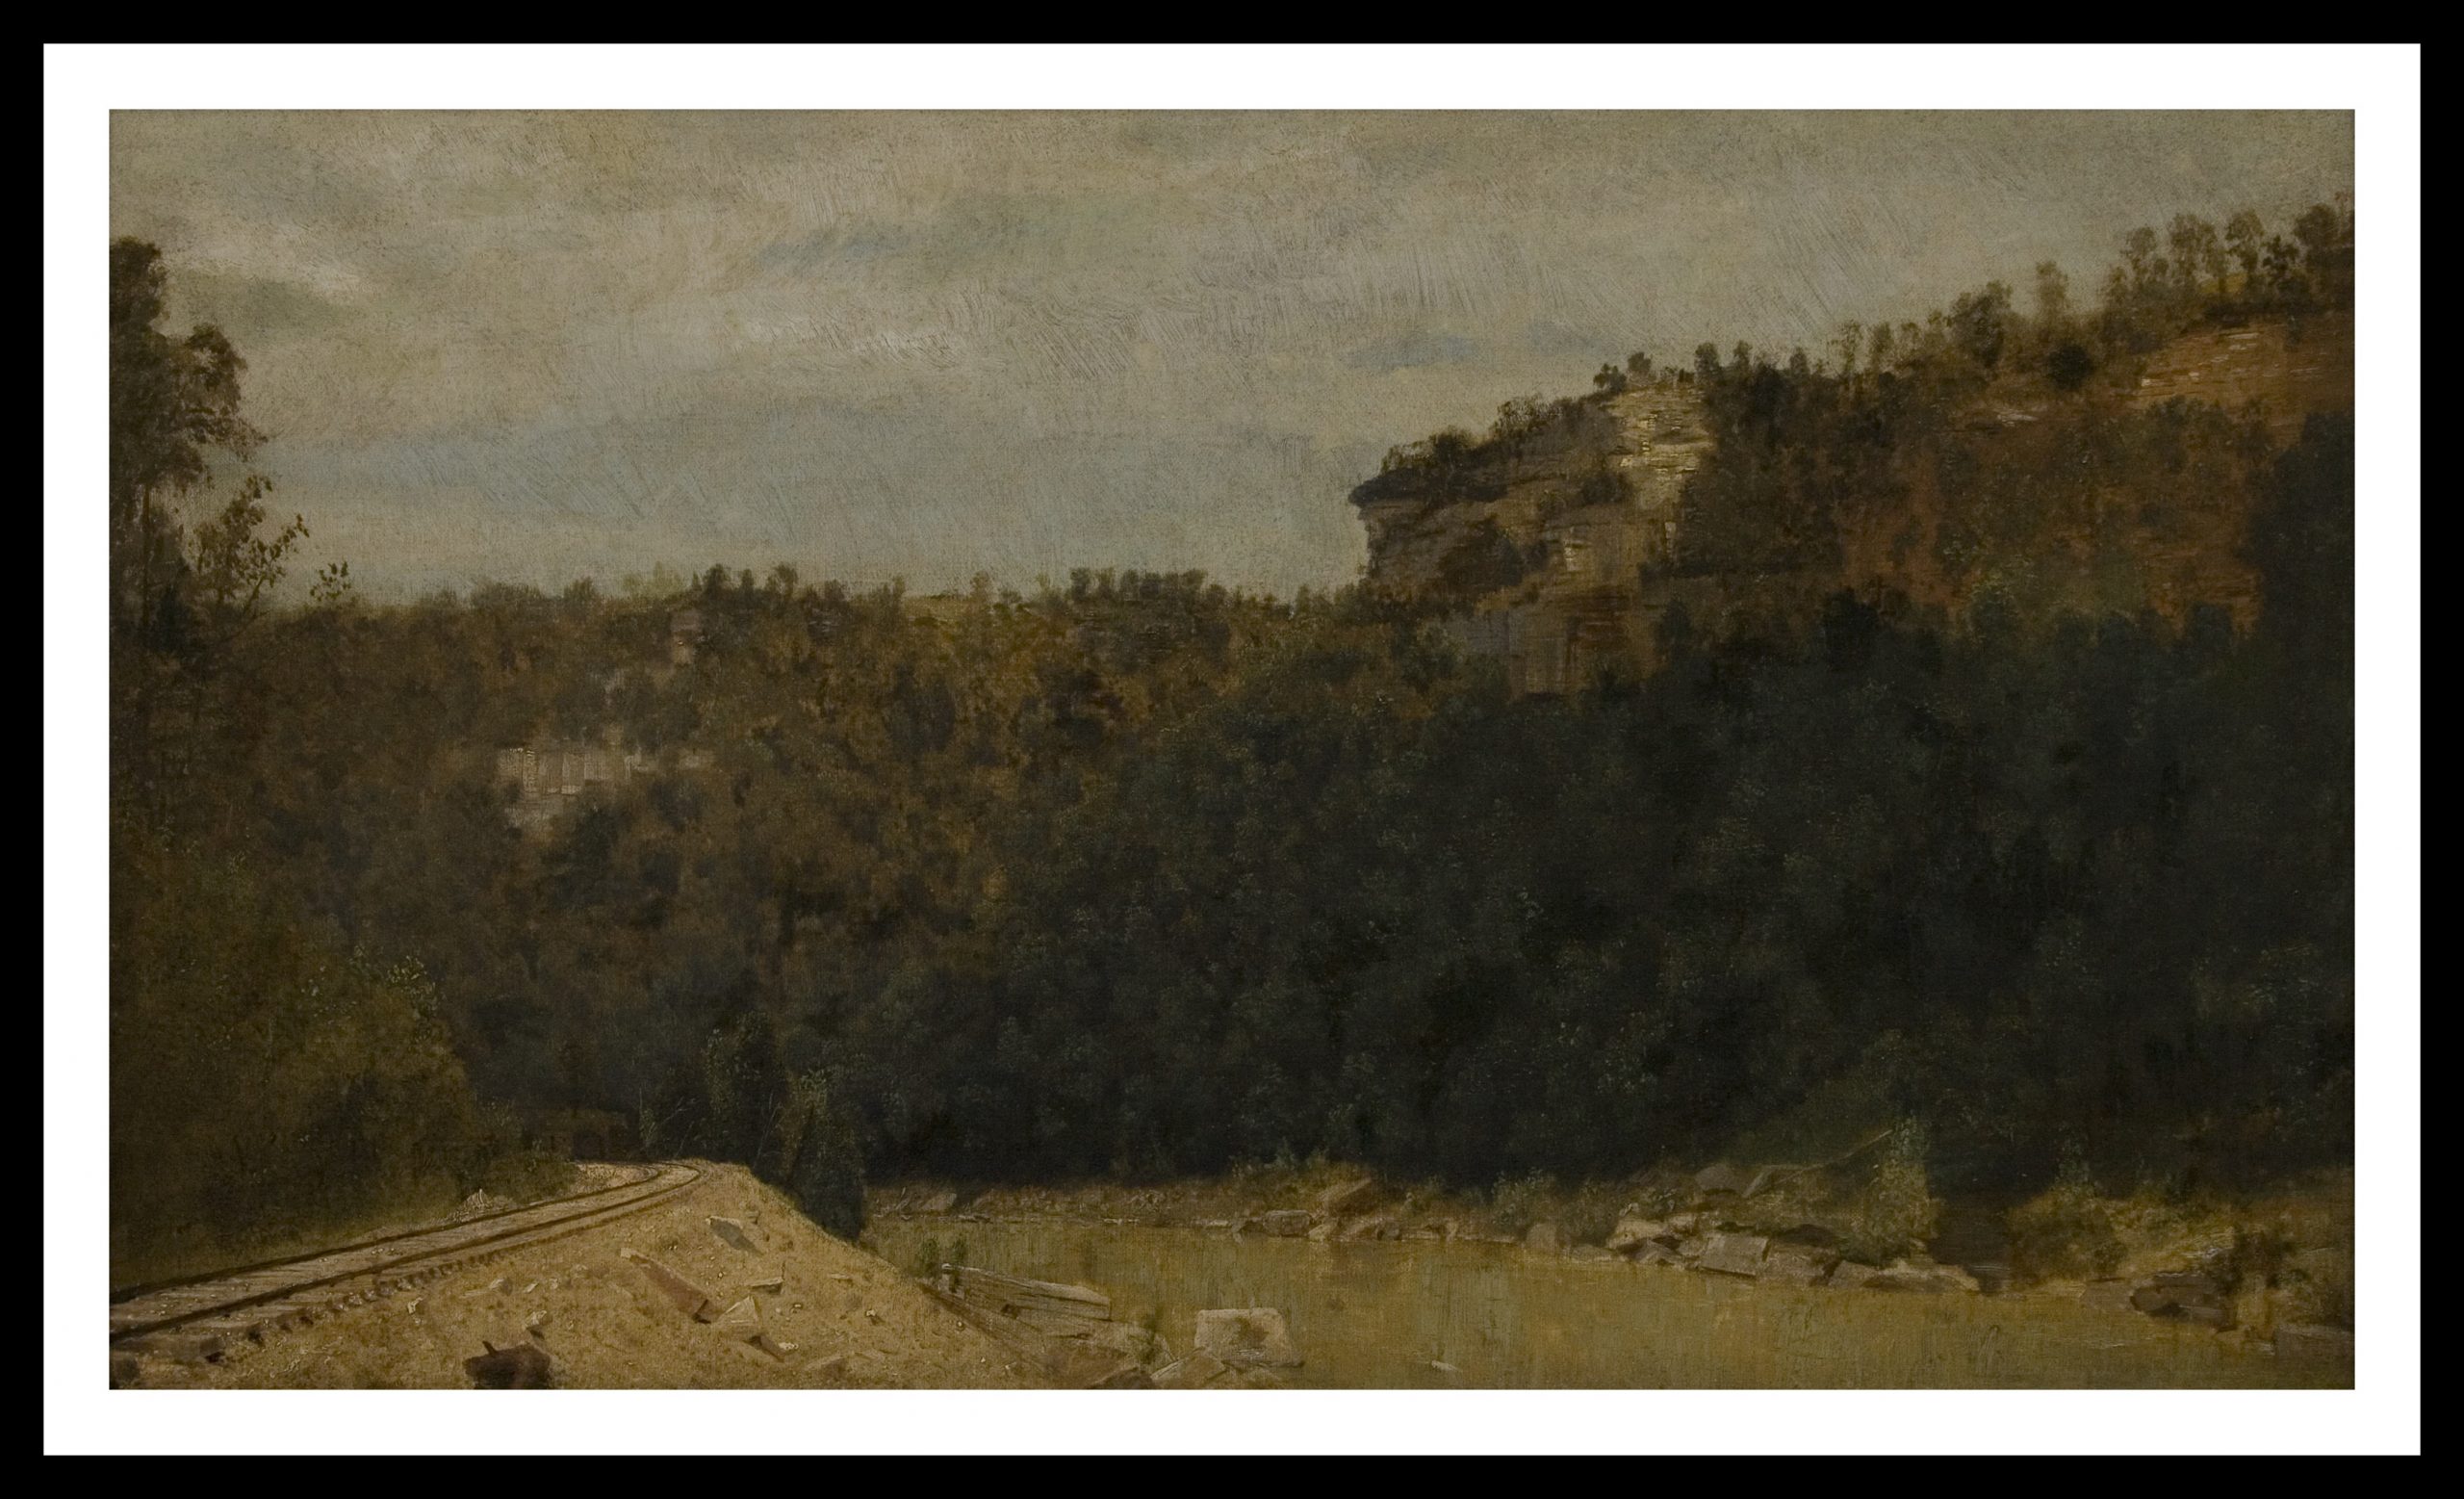 Thomas Pollock Anshutz, Untitled [Mountain Landscape with Railroad Tracks] (c. 1885-1890)